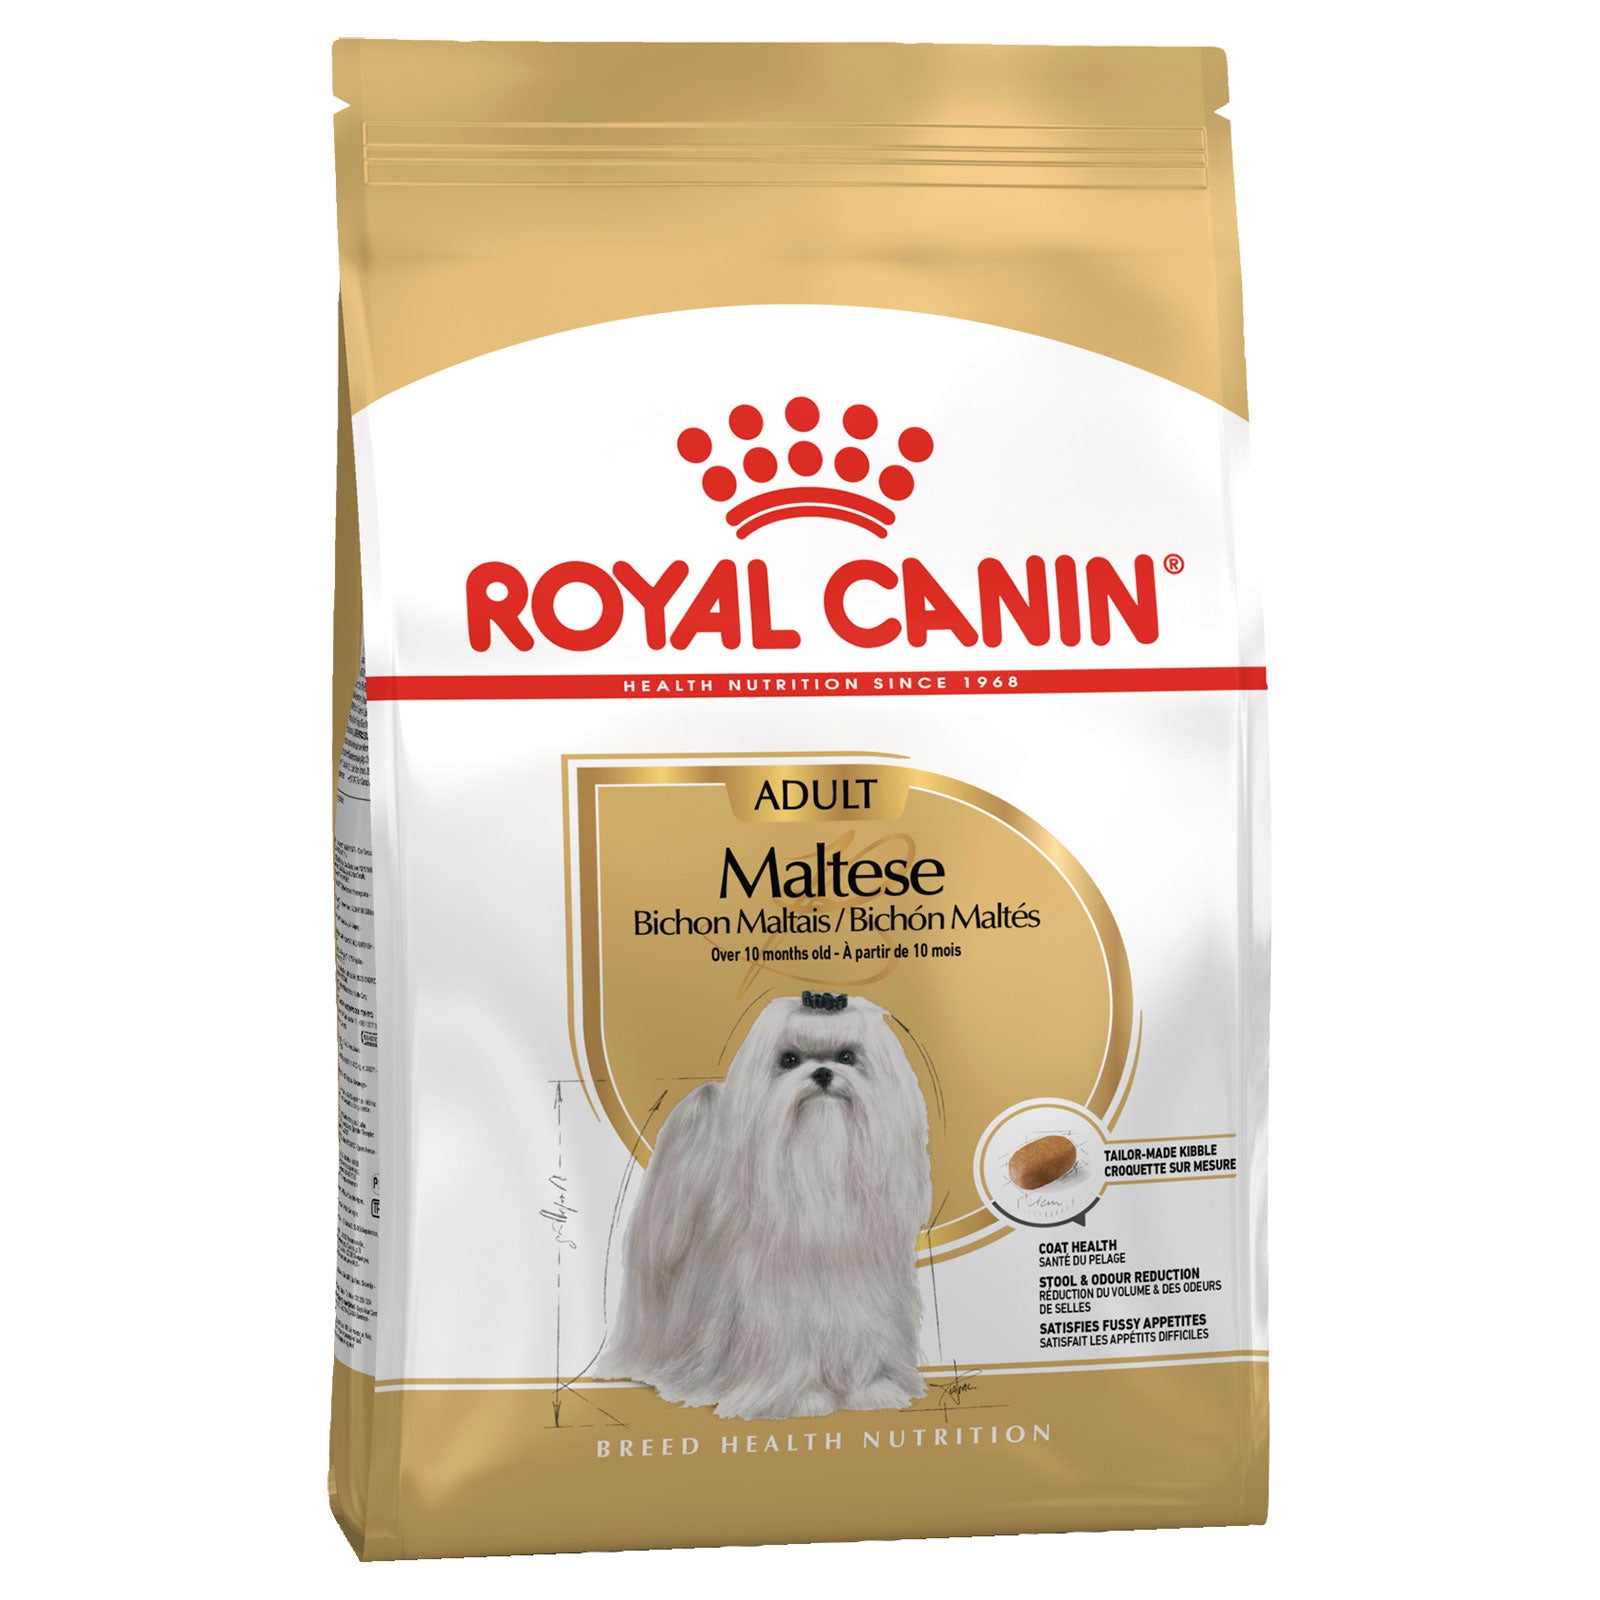 Royal Canin Dog Food Adult Maltese Terrier